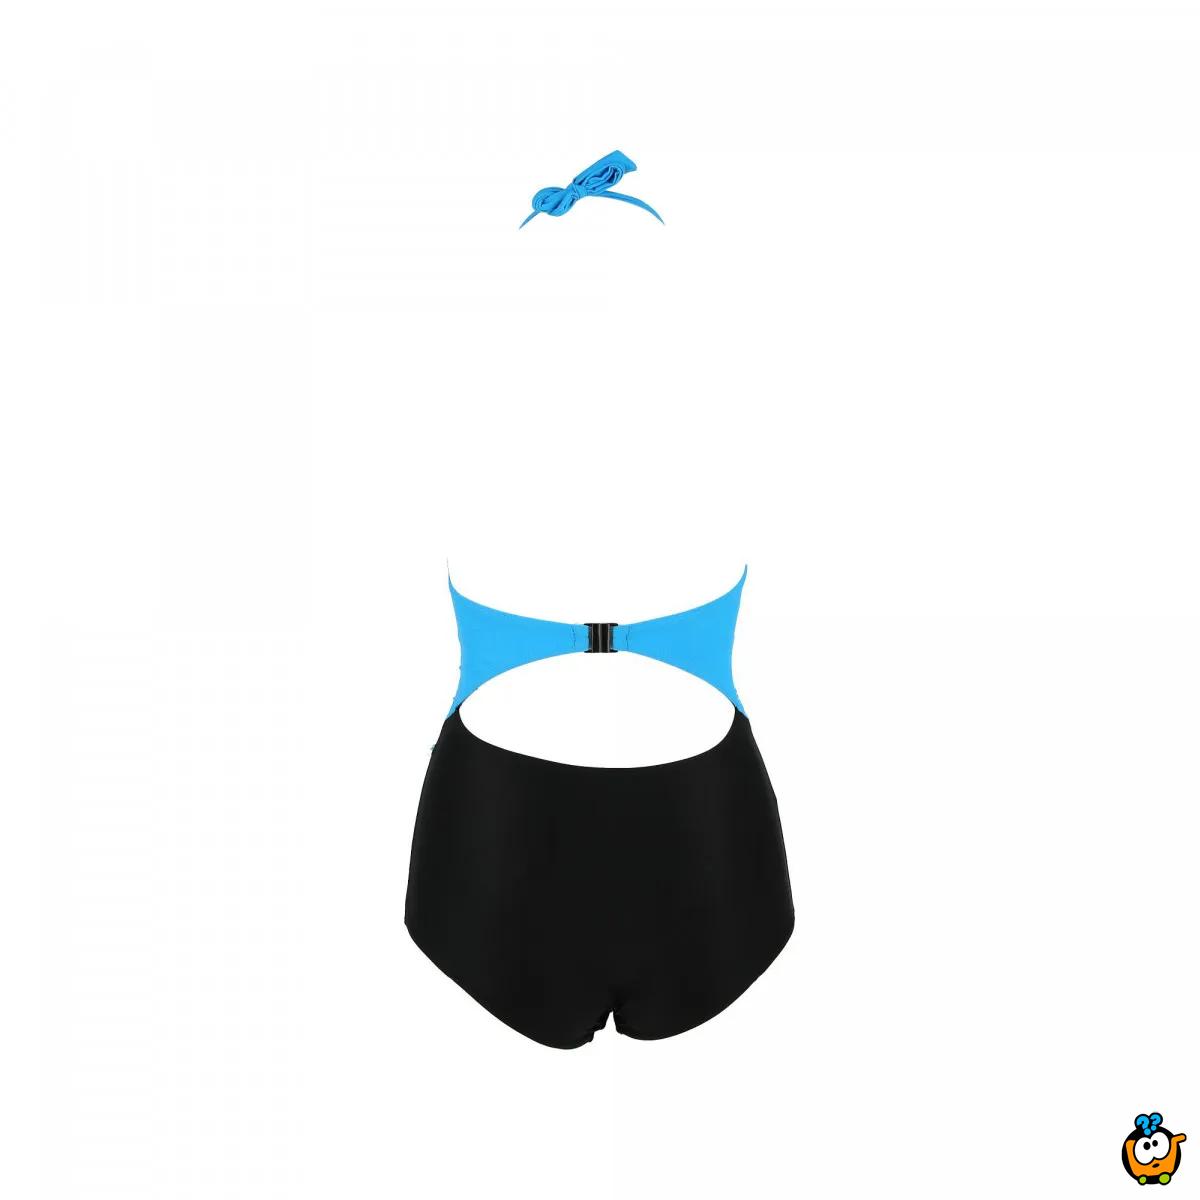 Jednodelni ženski kupaći kostim- 2TOP BLUE BLACK